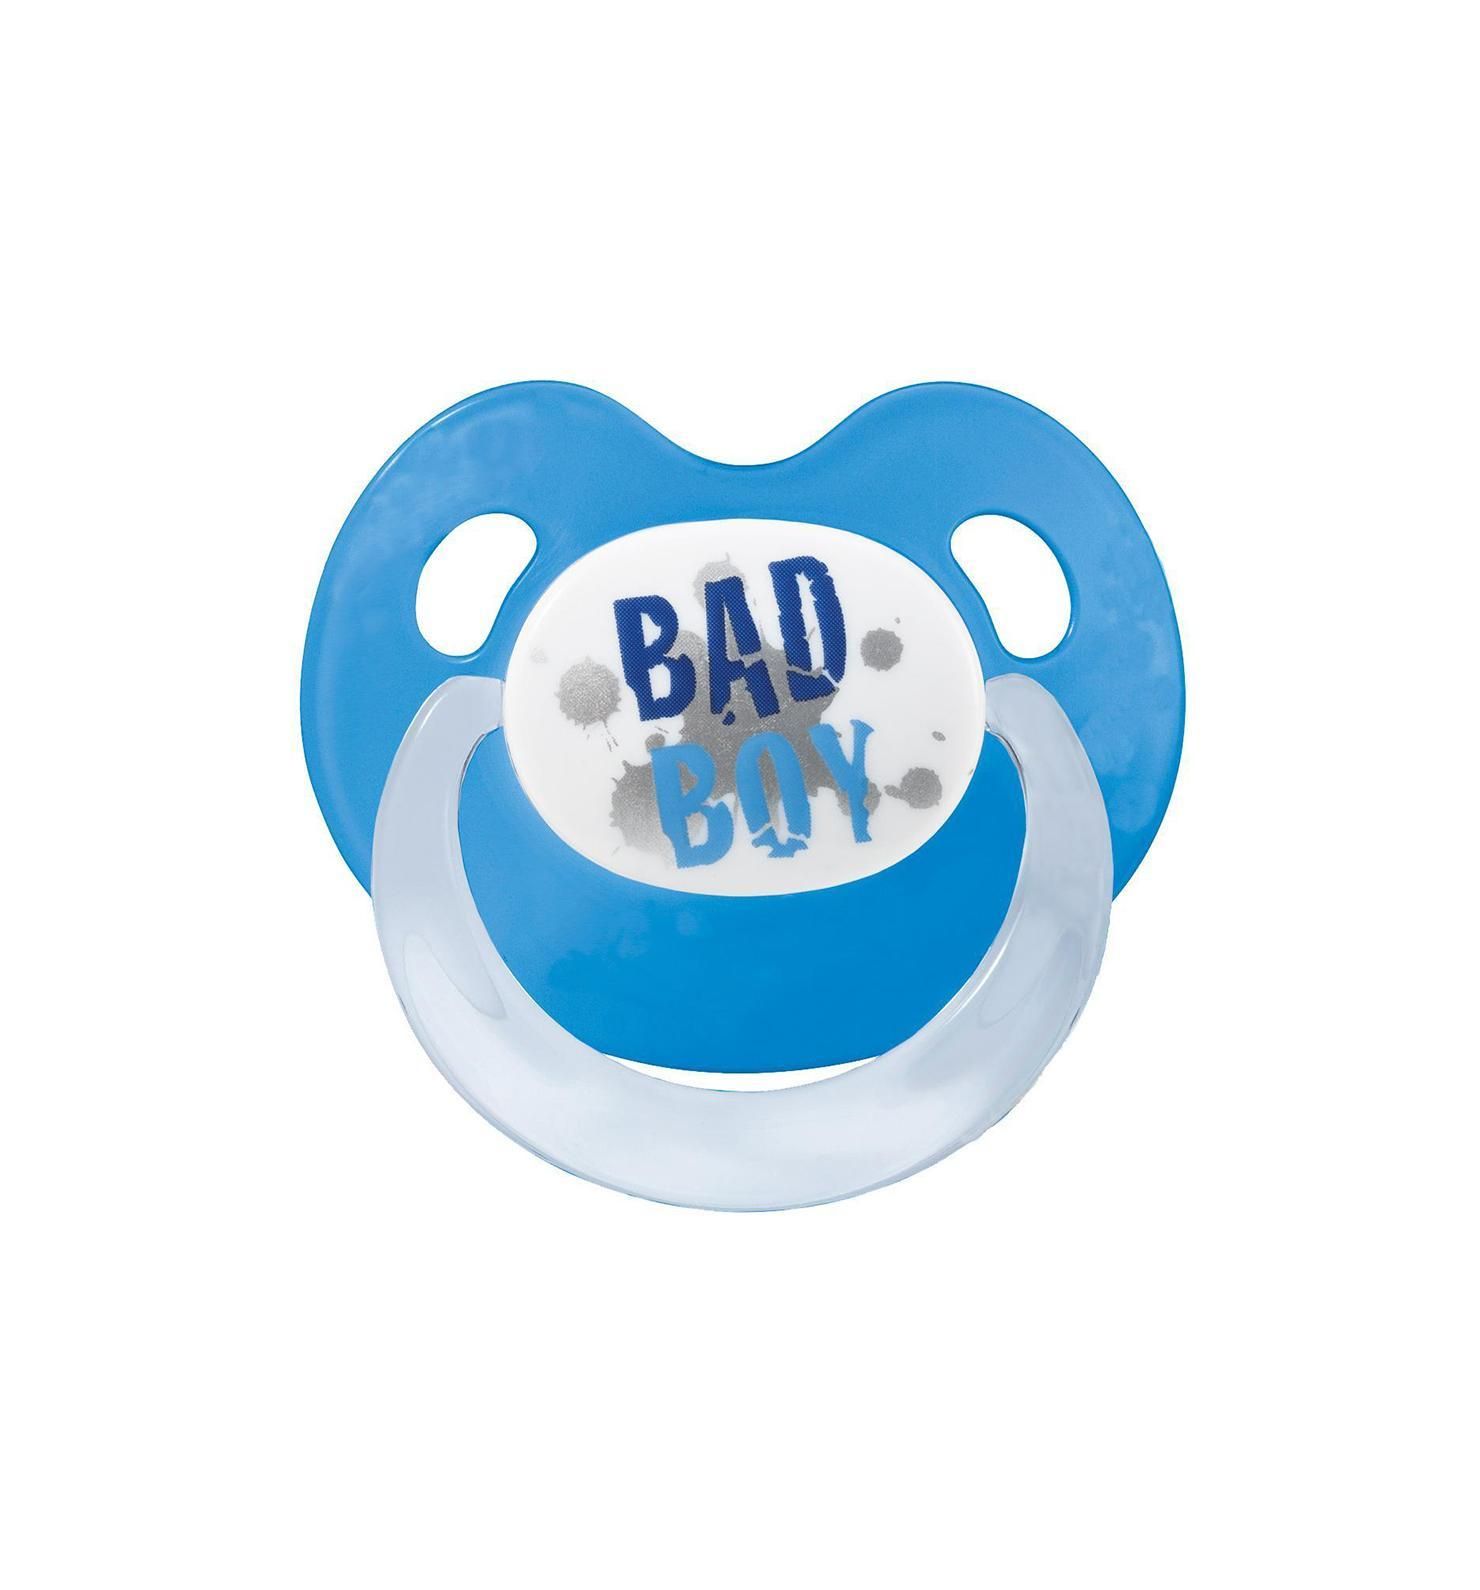  Bibi Dental   6-16 .BasicCare Drama Queen / Bad Boy